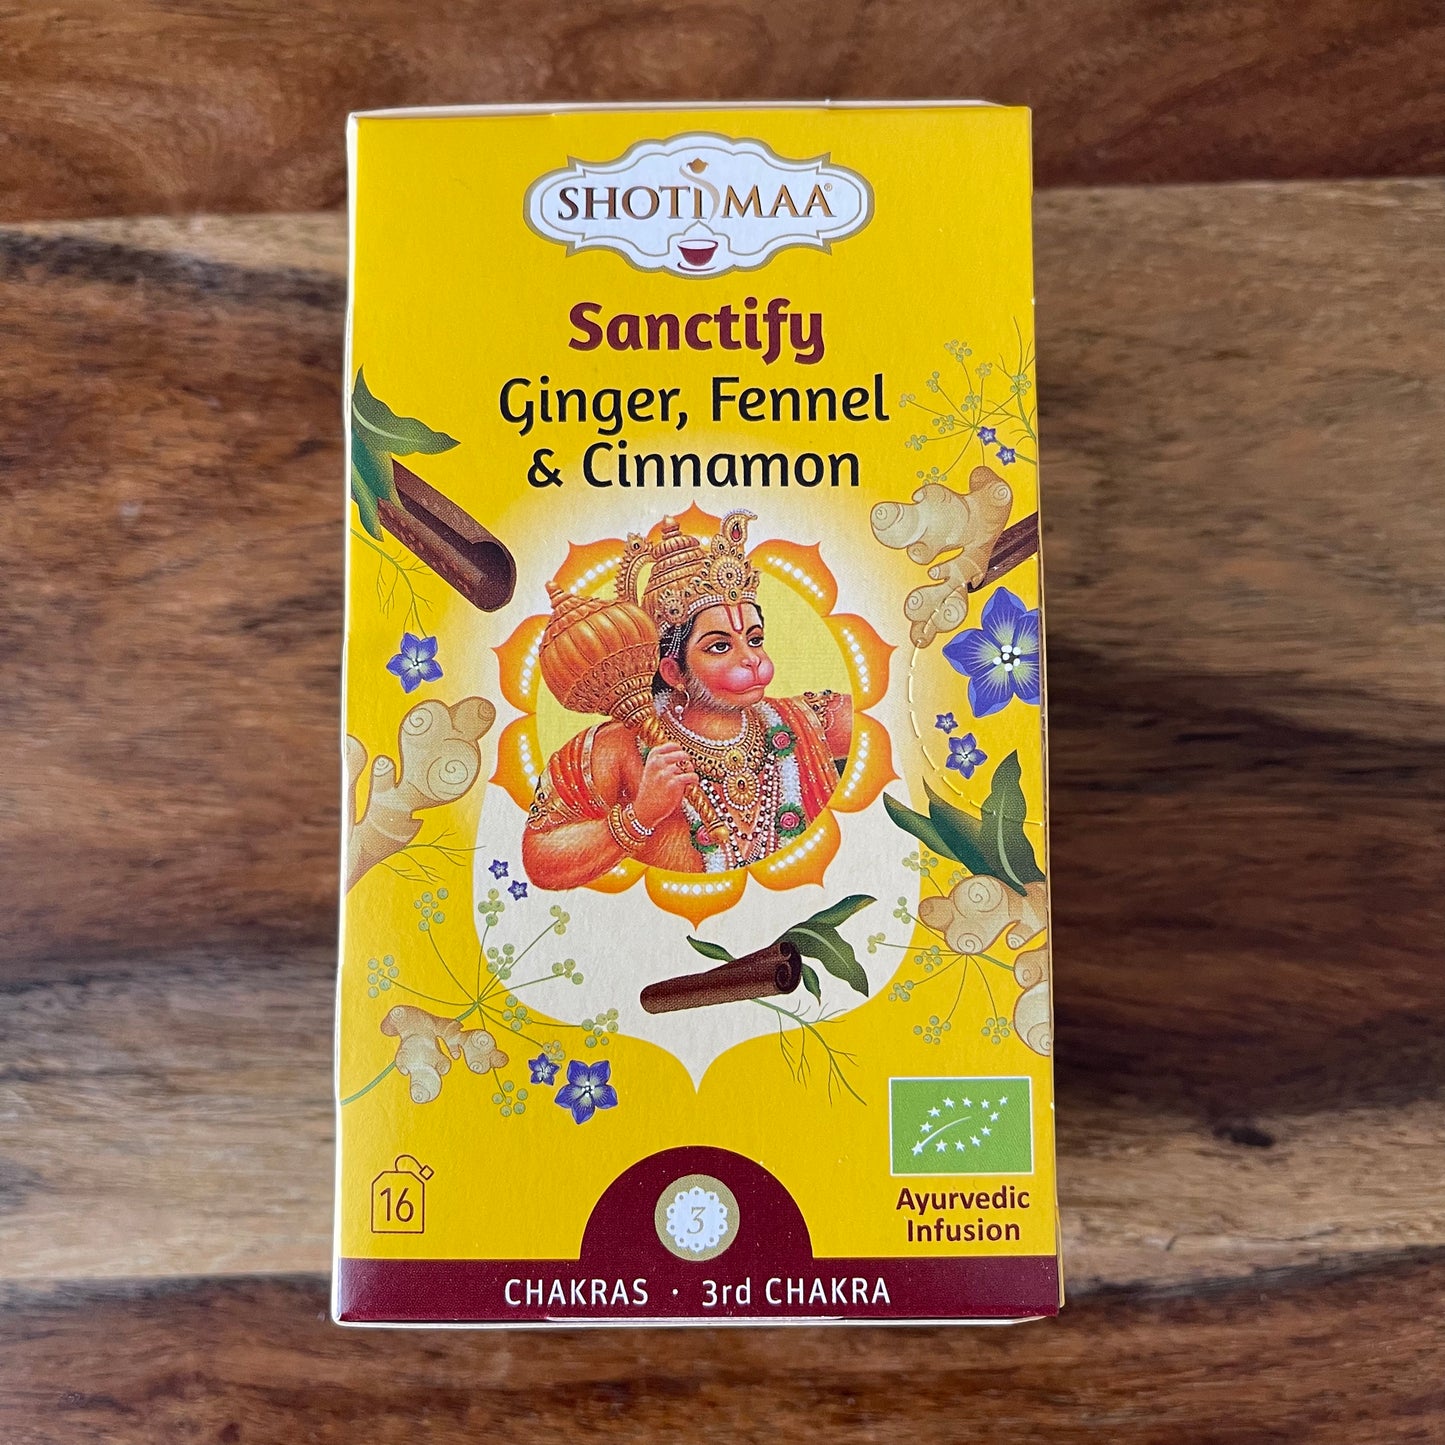 Shoti Maa Sanctify organic herbal tea